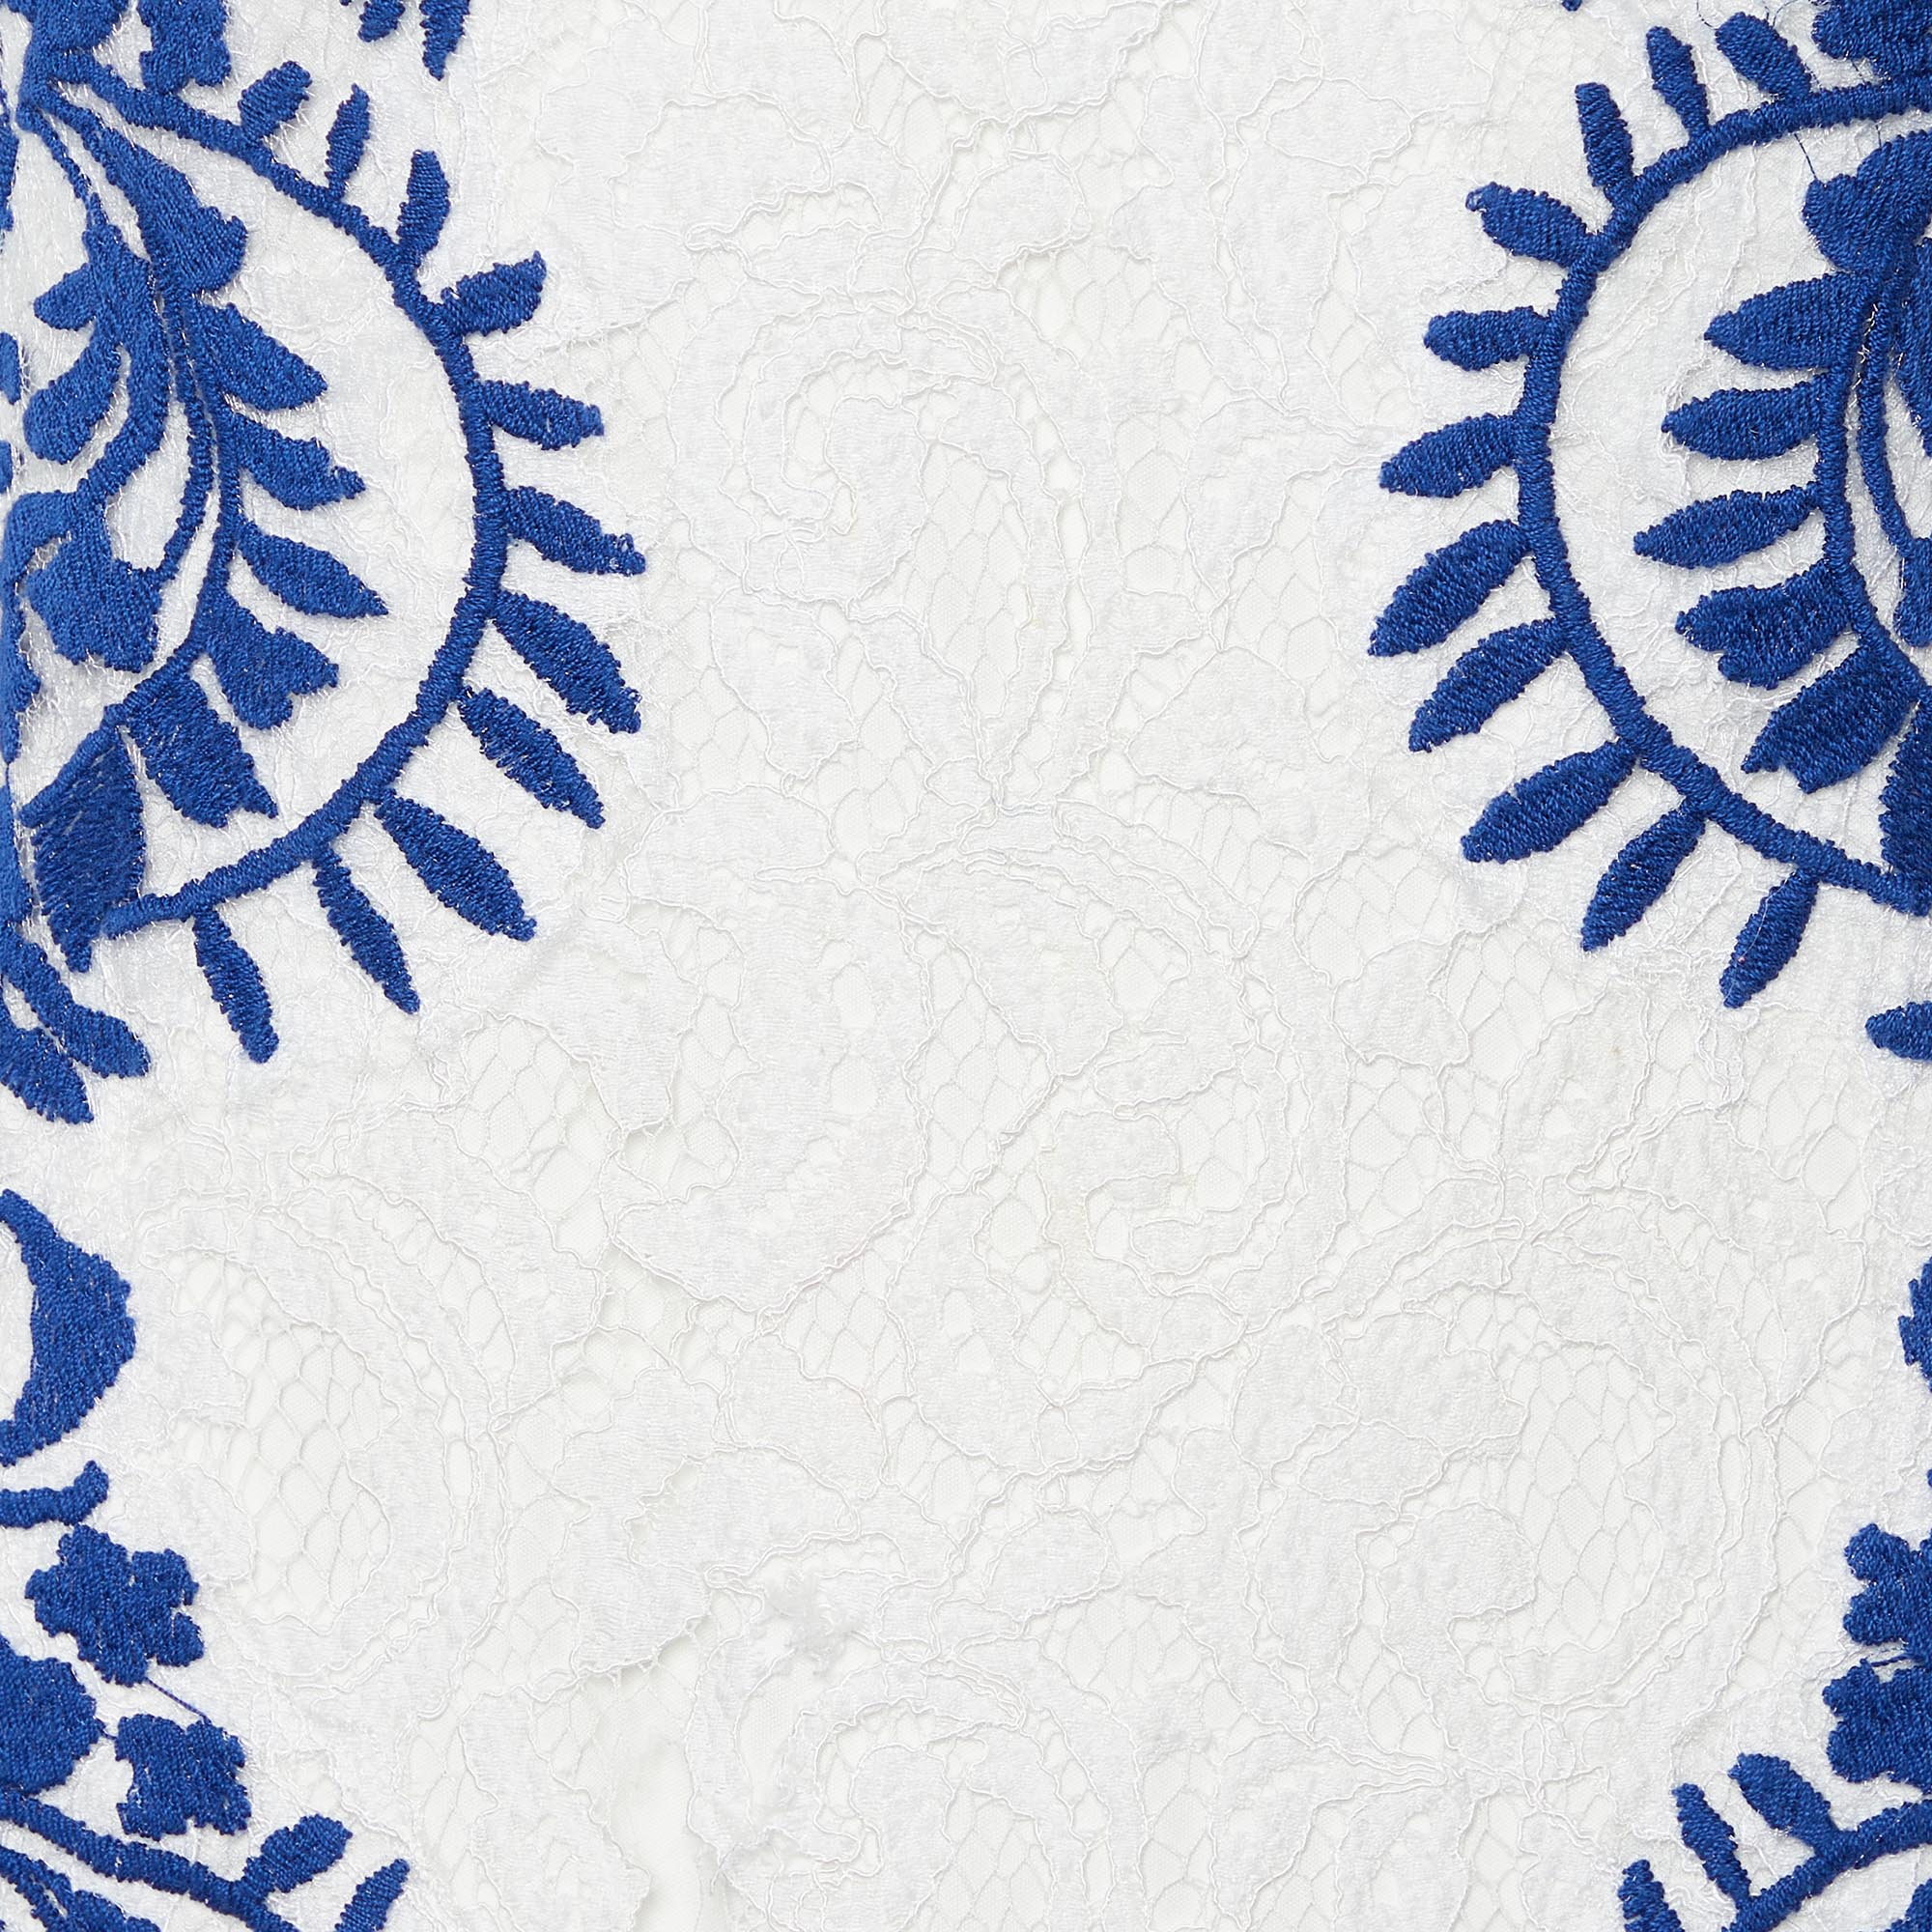 Tadashi Shoji White & Blue Embroidered Floral Lace Midi Dress M